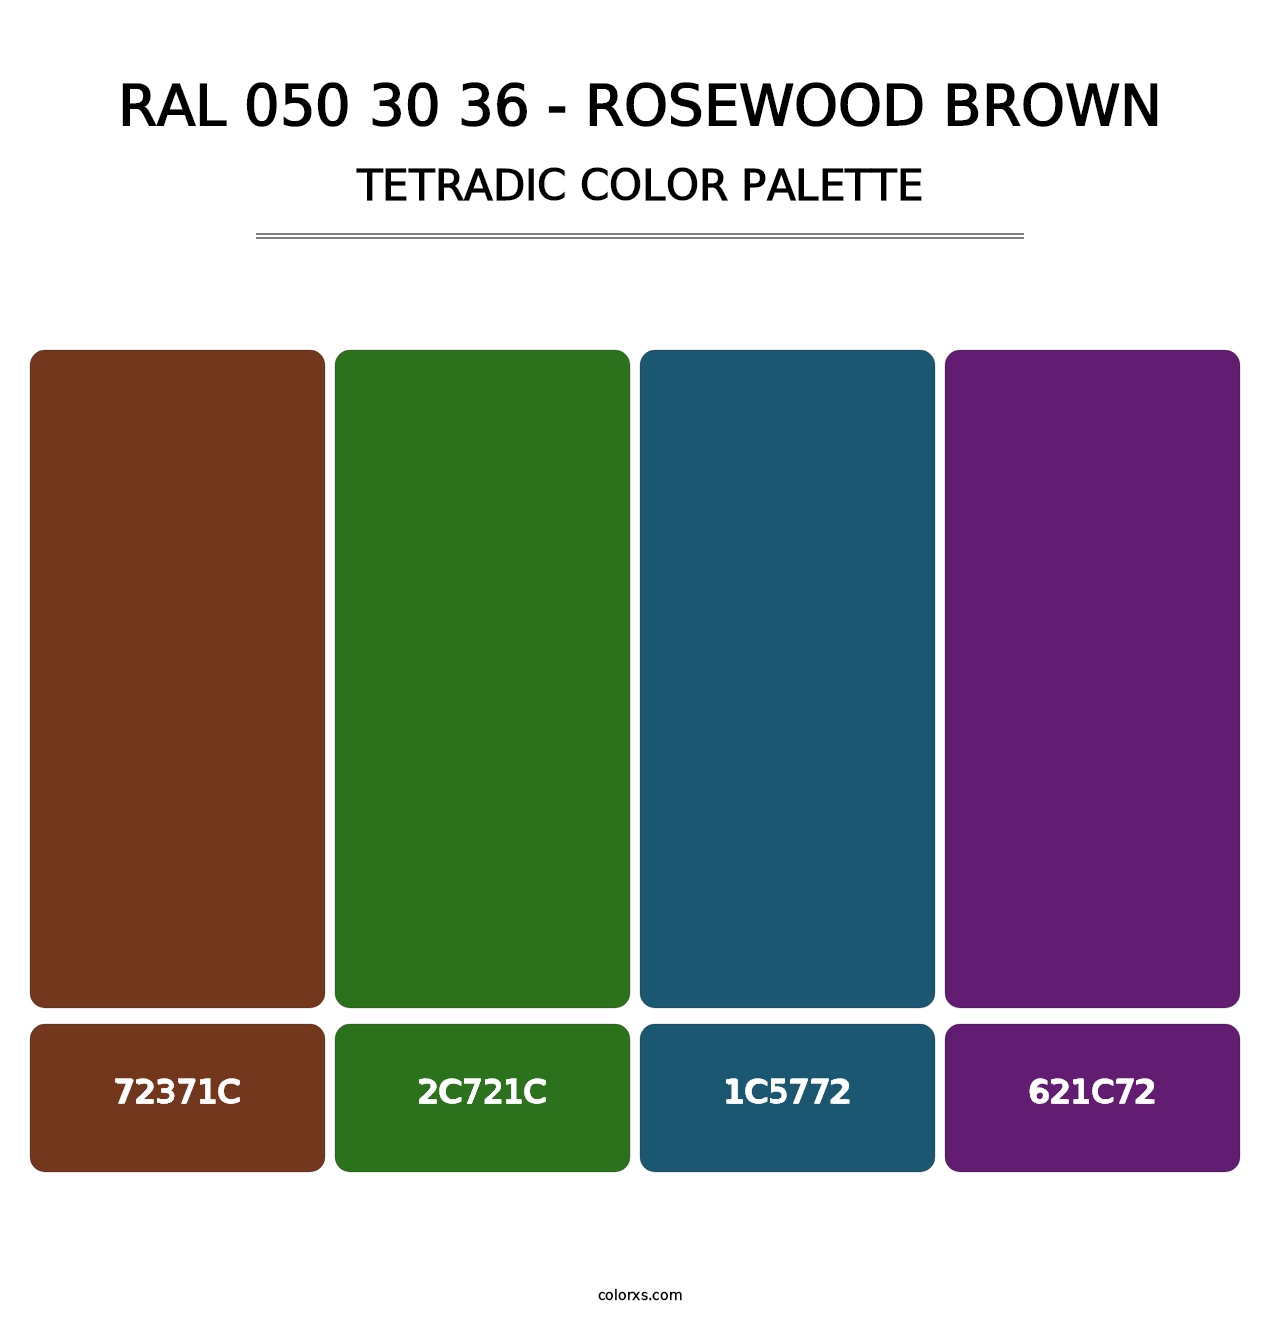 RAL 050 30 36 - Rosewood Brown - Tetradic Color Palette